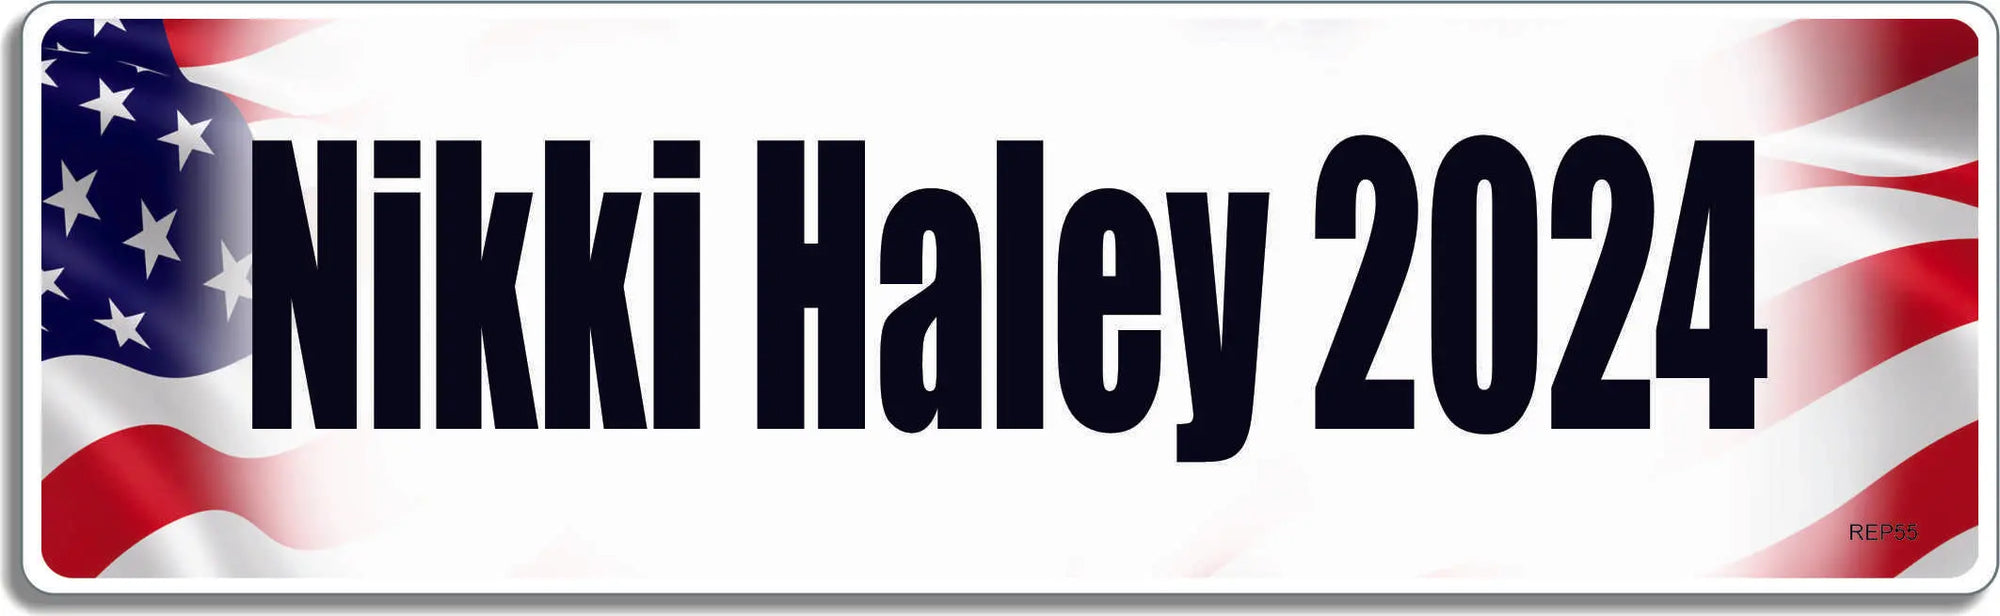 Nikki Haley 2024 Bumper Sticker, Car Magnet Humper Bumper